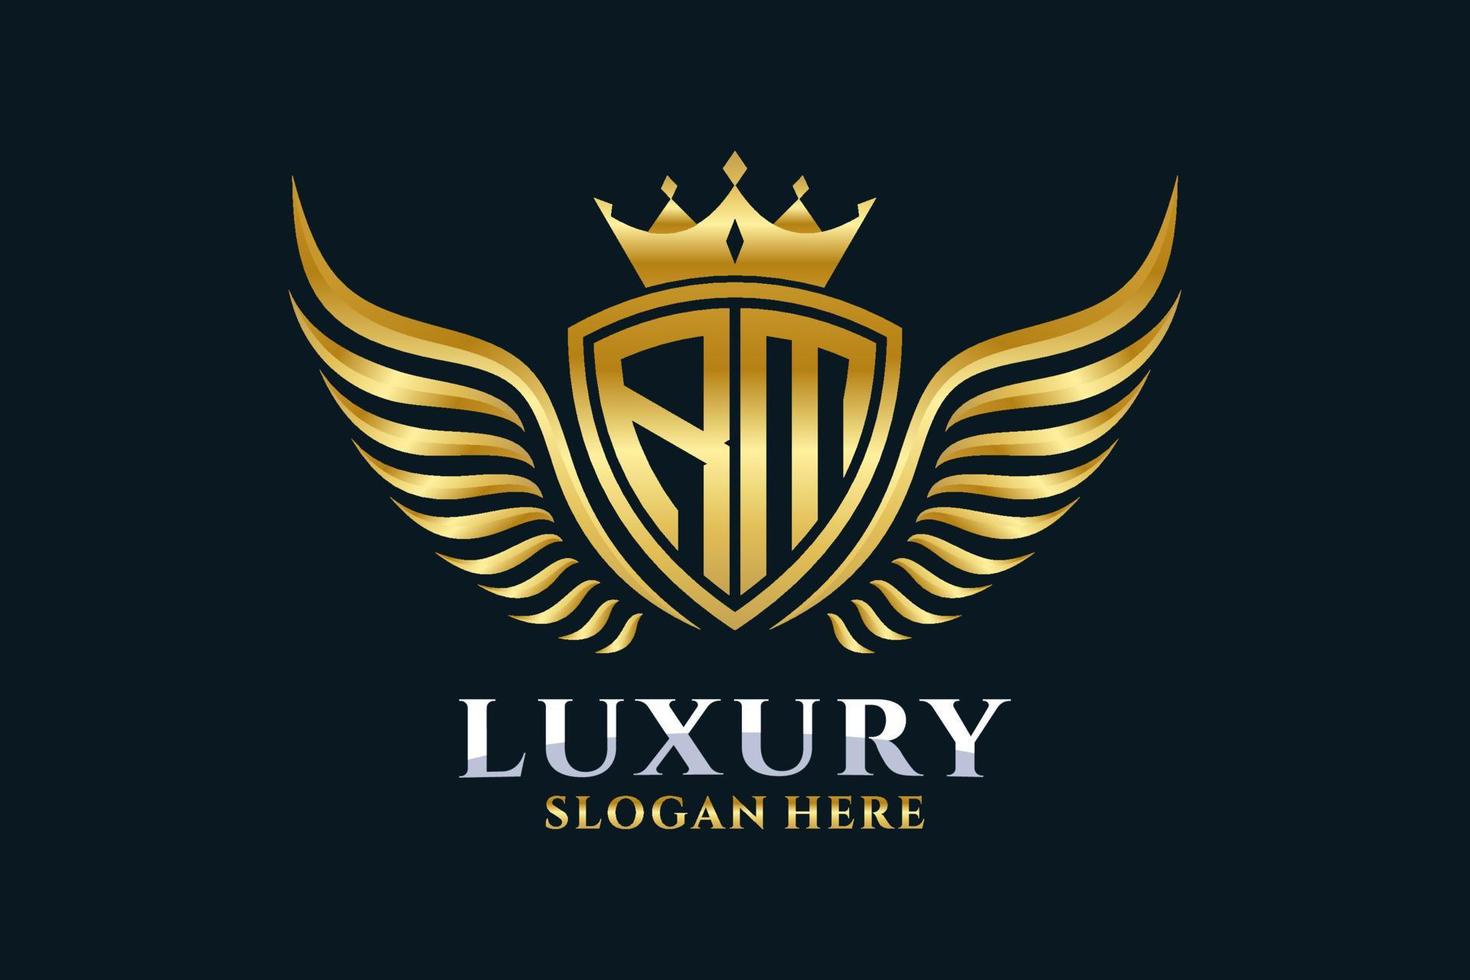 luxe Koninklijk vleugel brief rm kam goud kleur logo vector, zege logo, kam logo, vleugel logo, vector logo sjabloon.